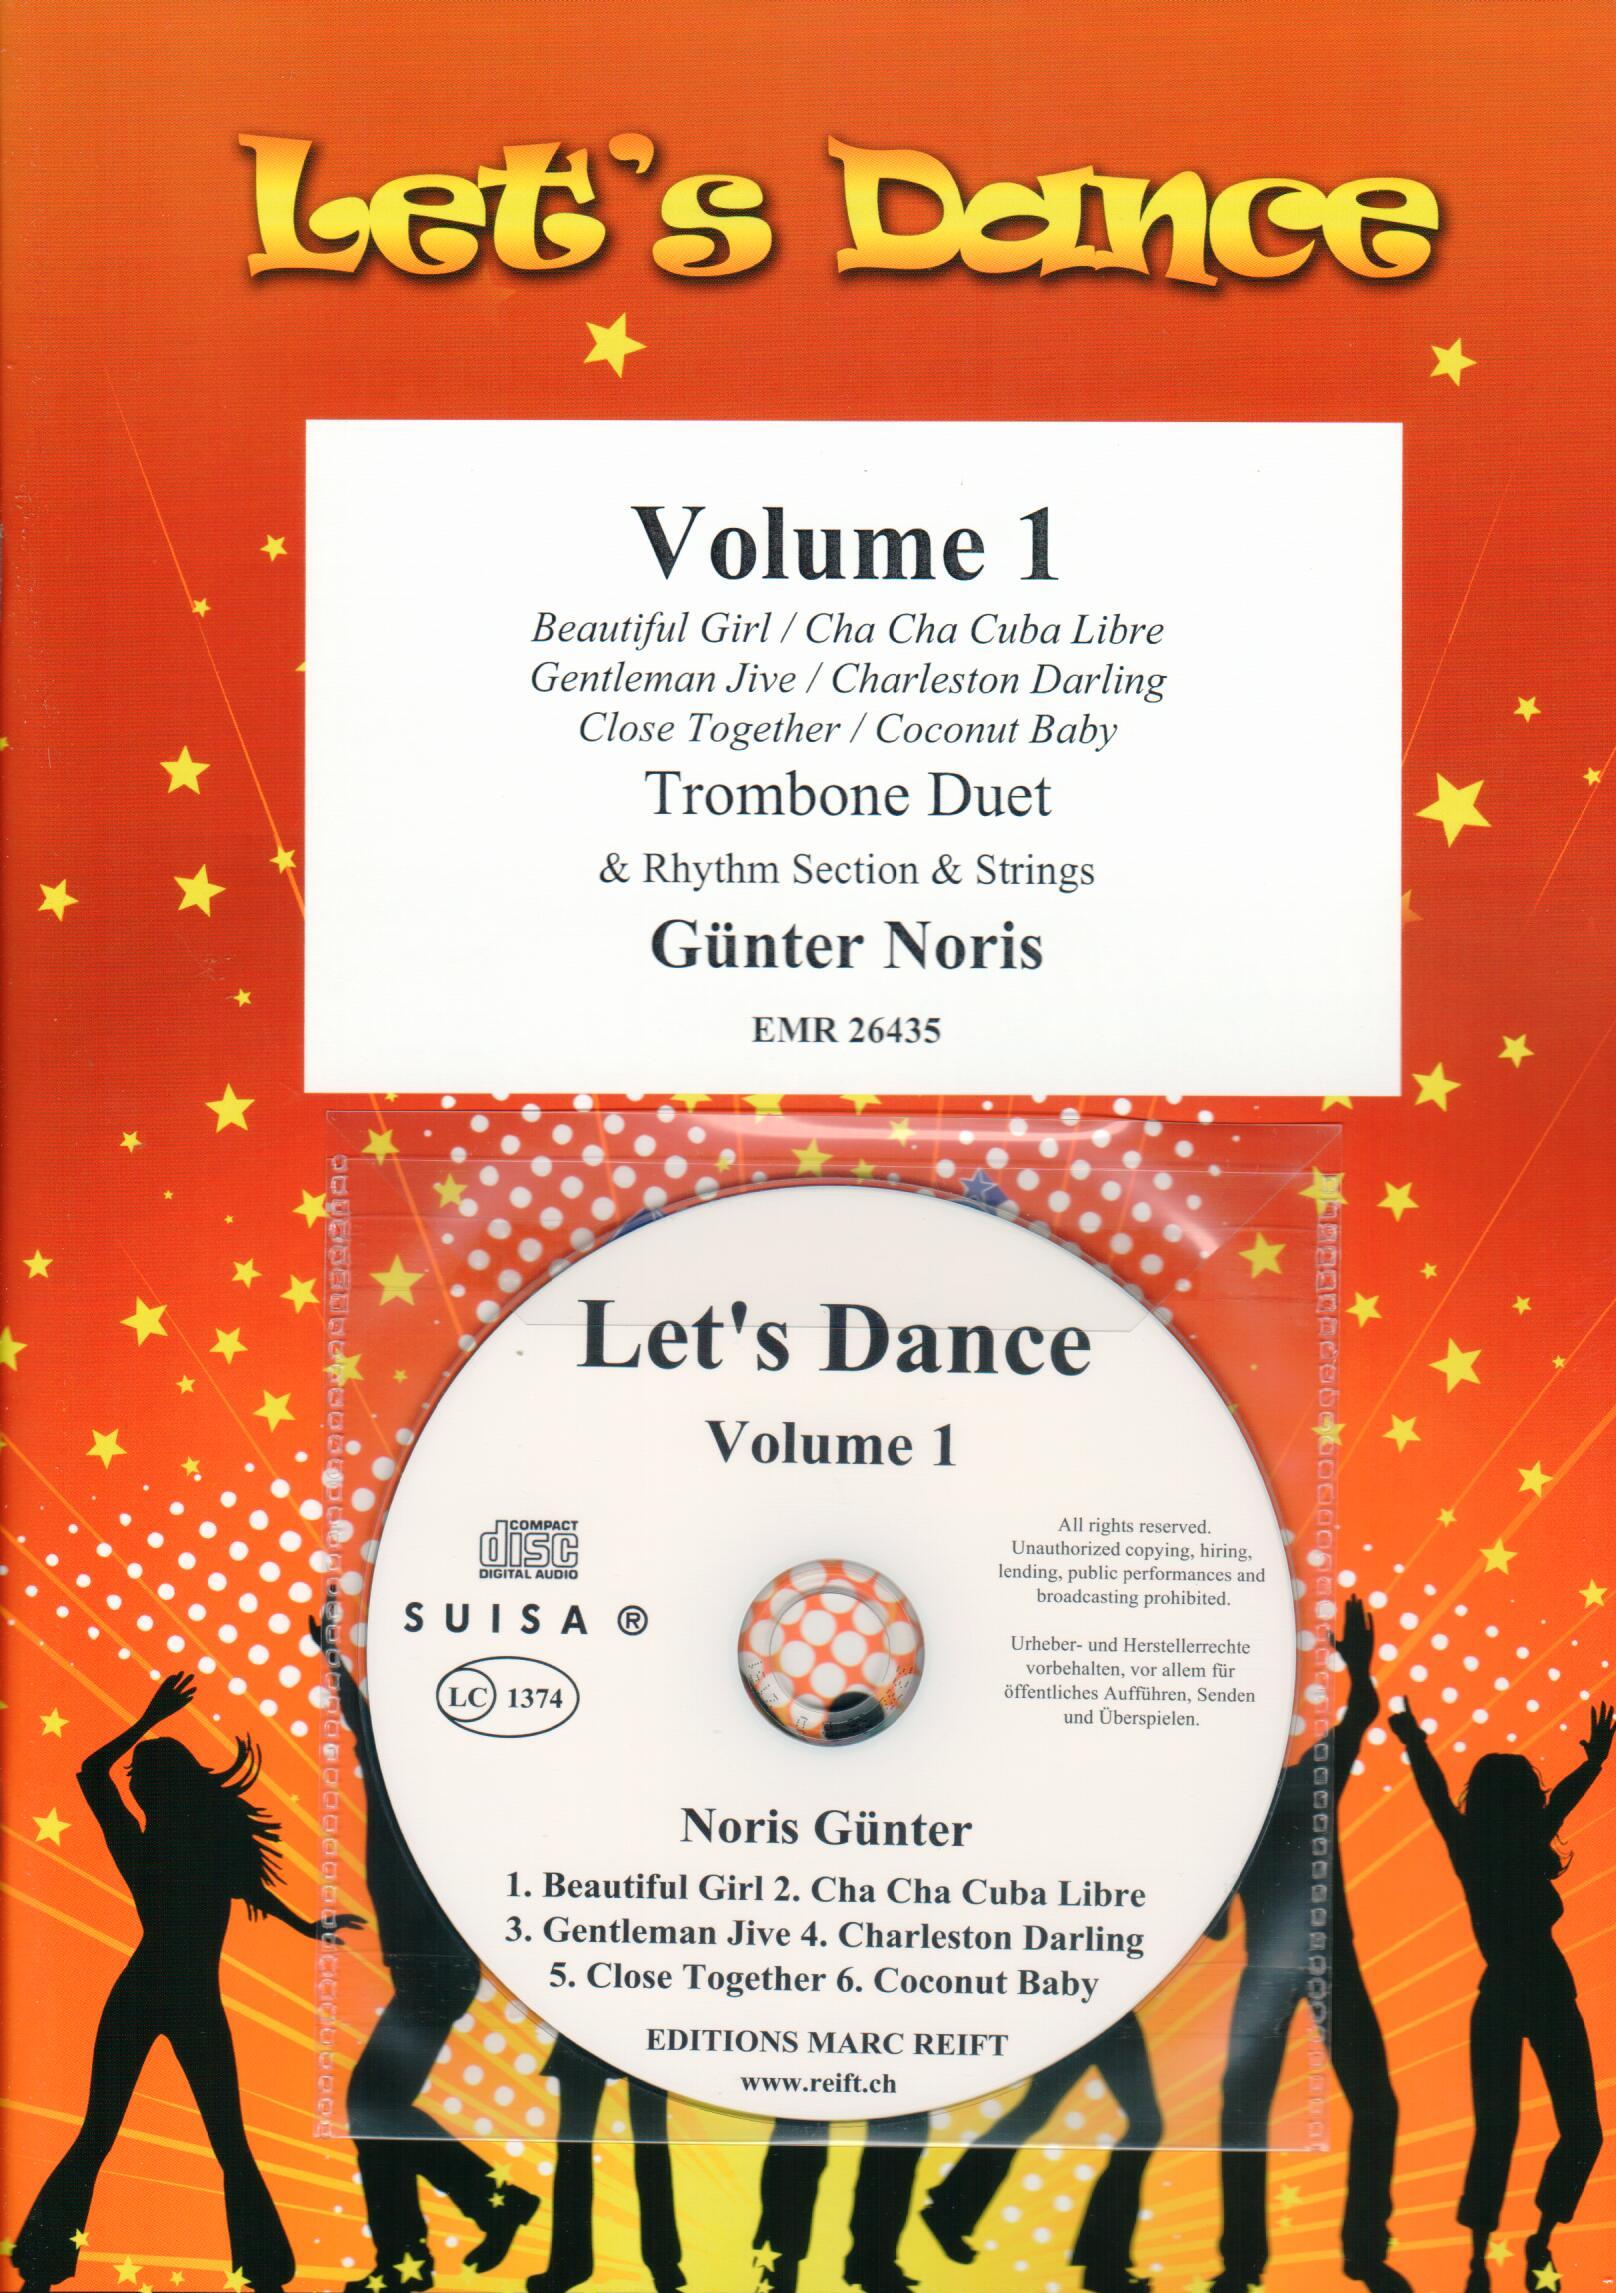 LET'S DANCE VOLUME 1, SOLOS - Trombone